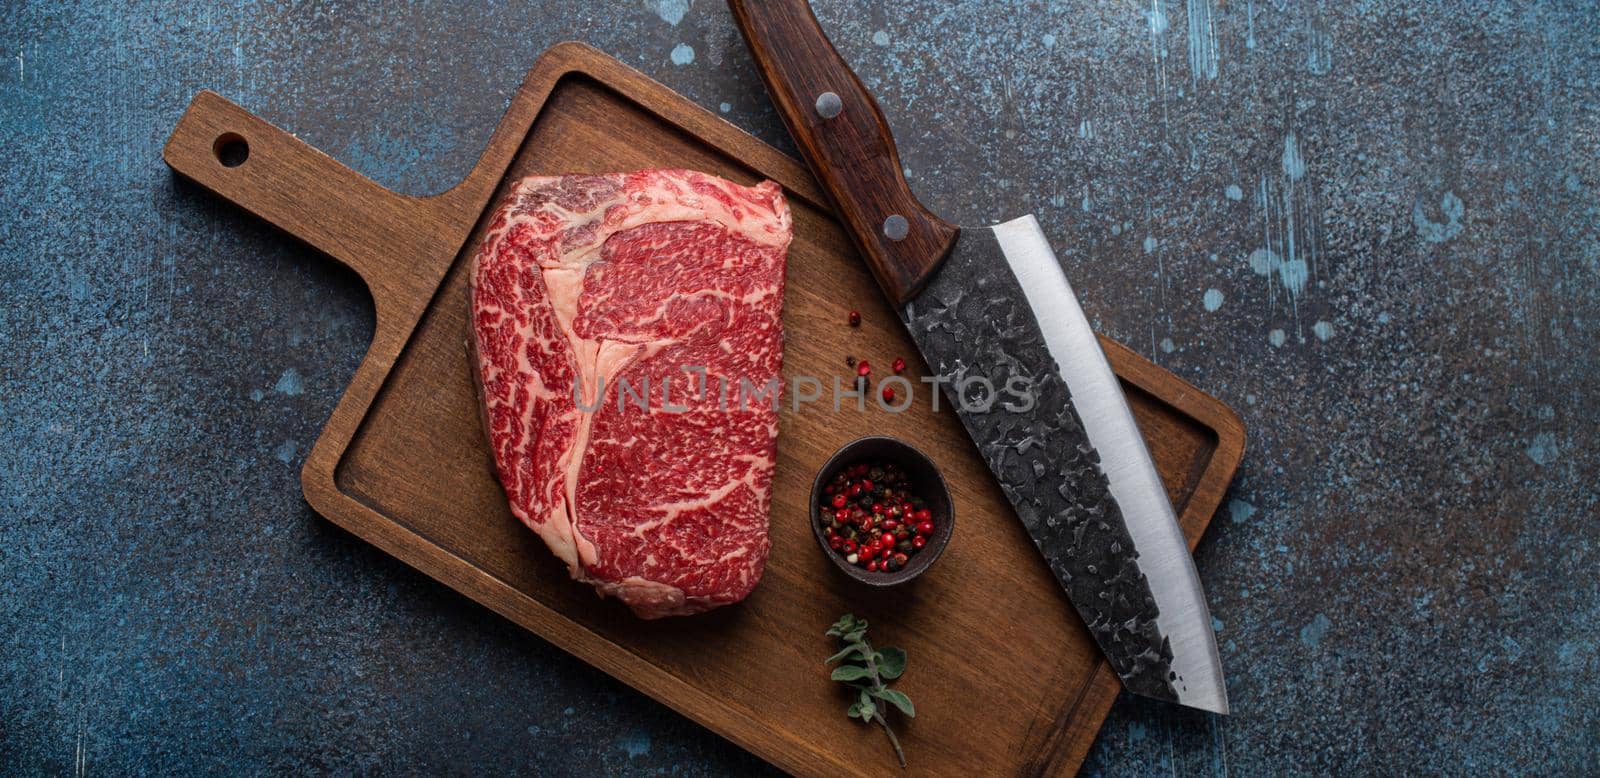 Raw meat beef marbled prime cut steak Ribeye on wooden cutting board by its_al_dente